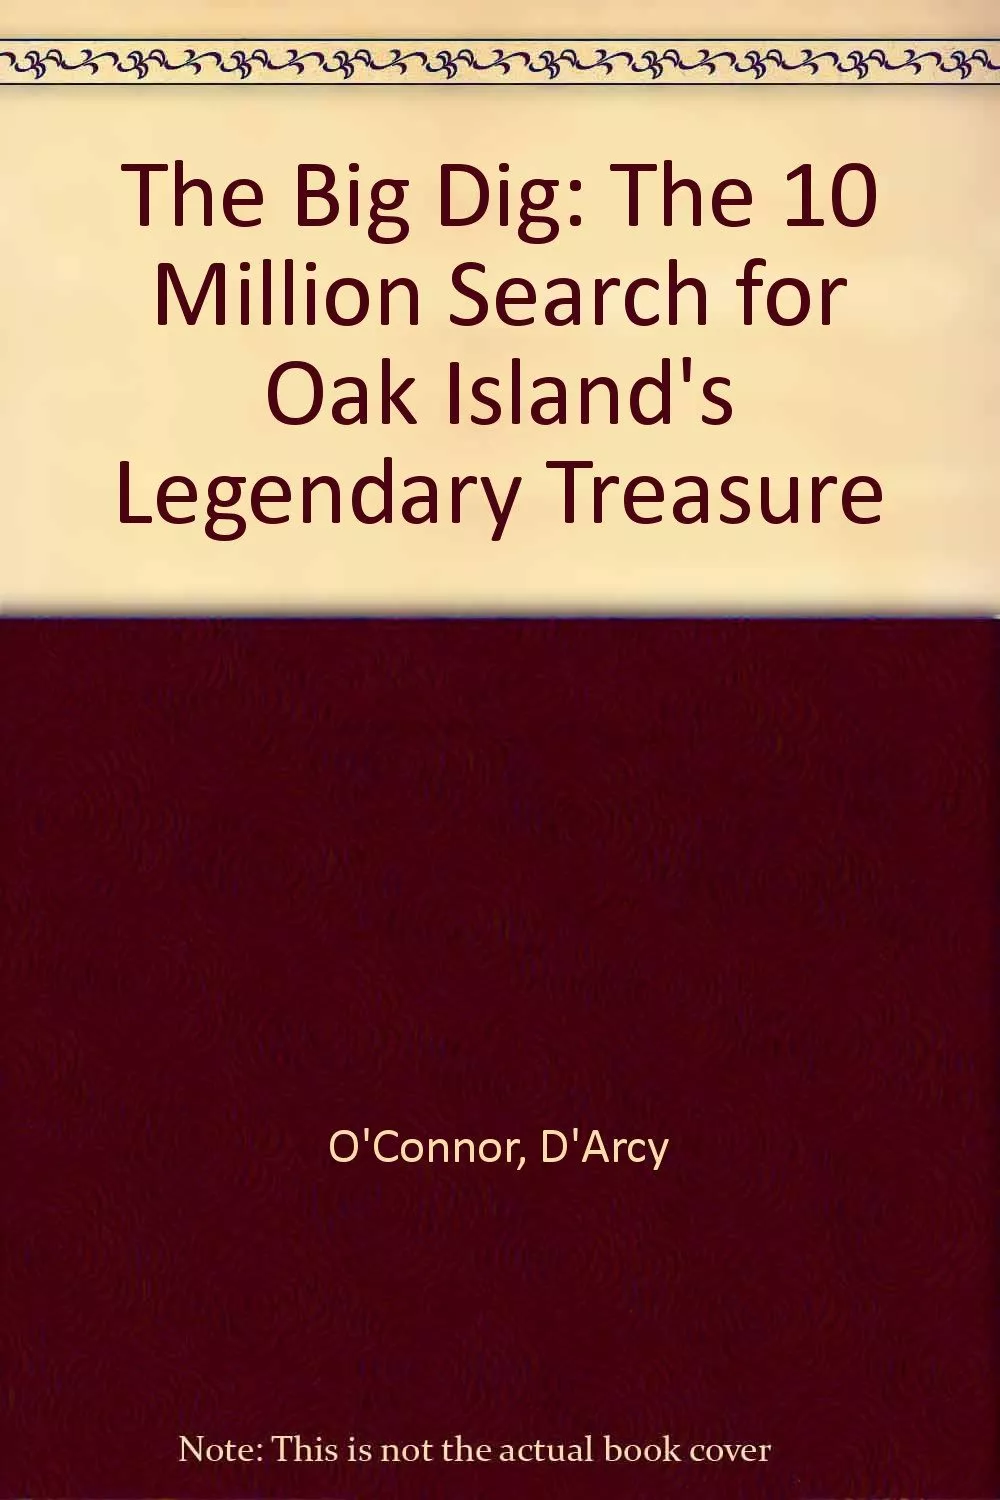 The Big Dig: The $10 Million Search for Oak Island's Legendary Treasure